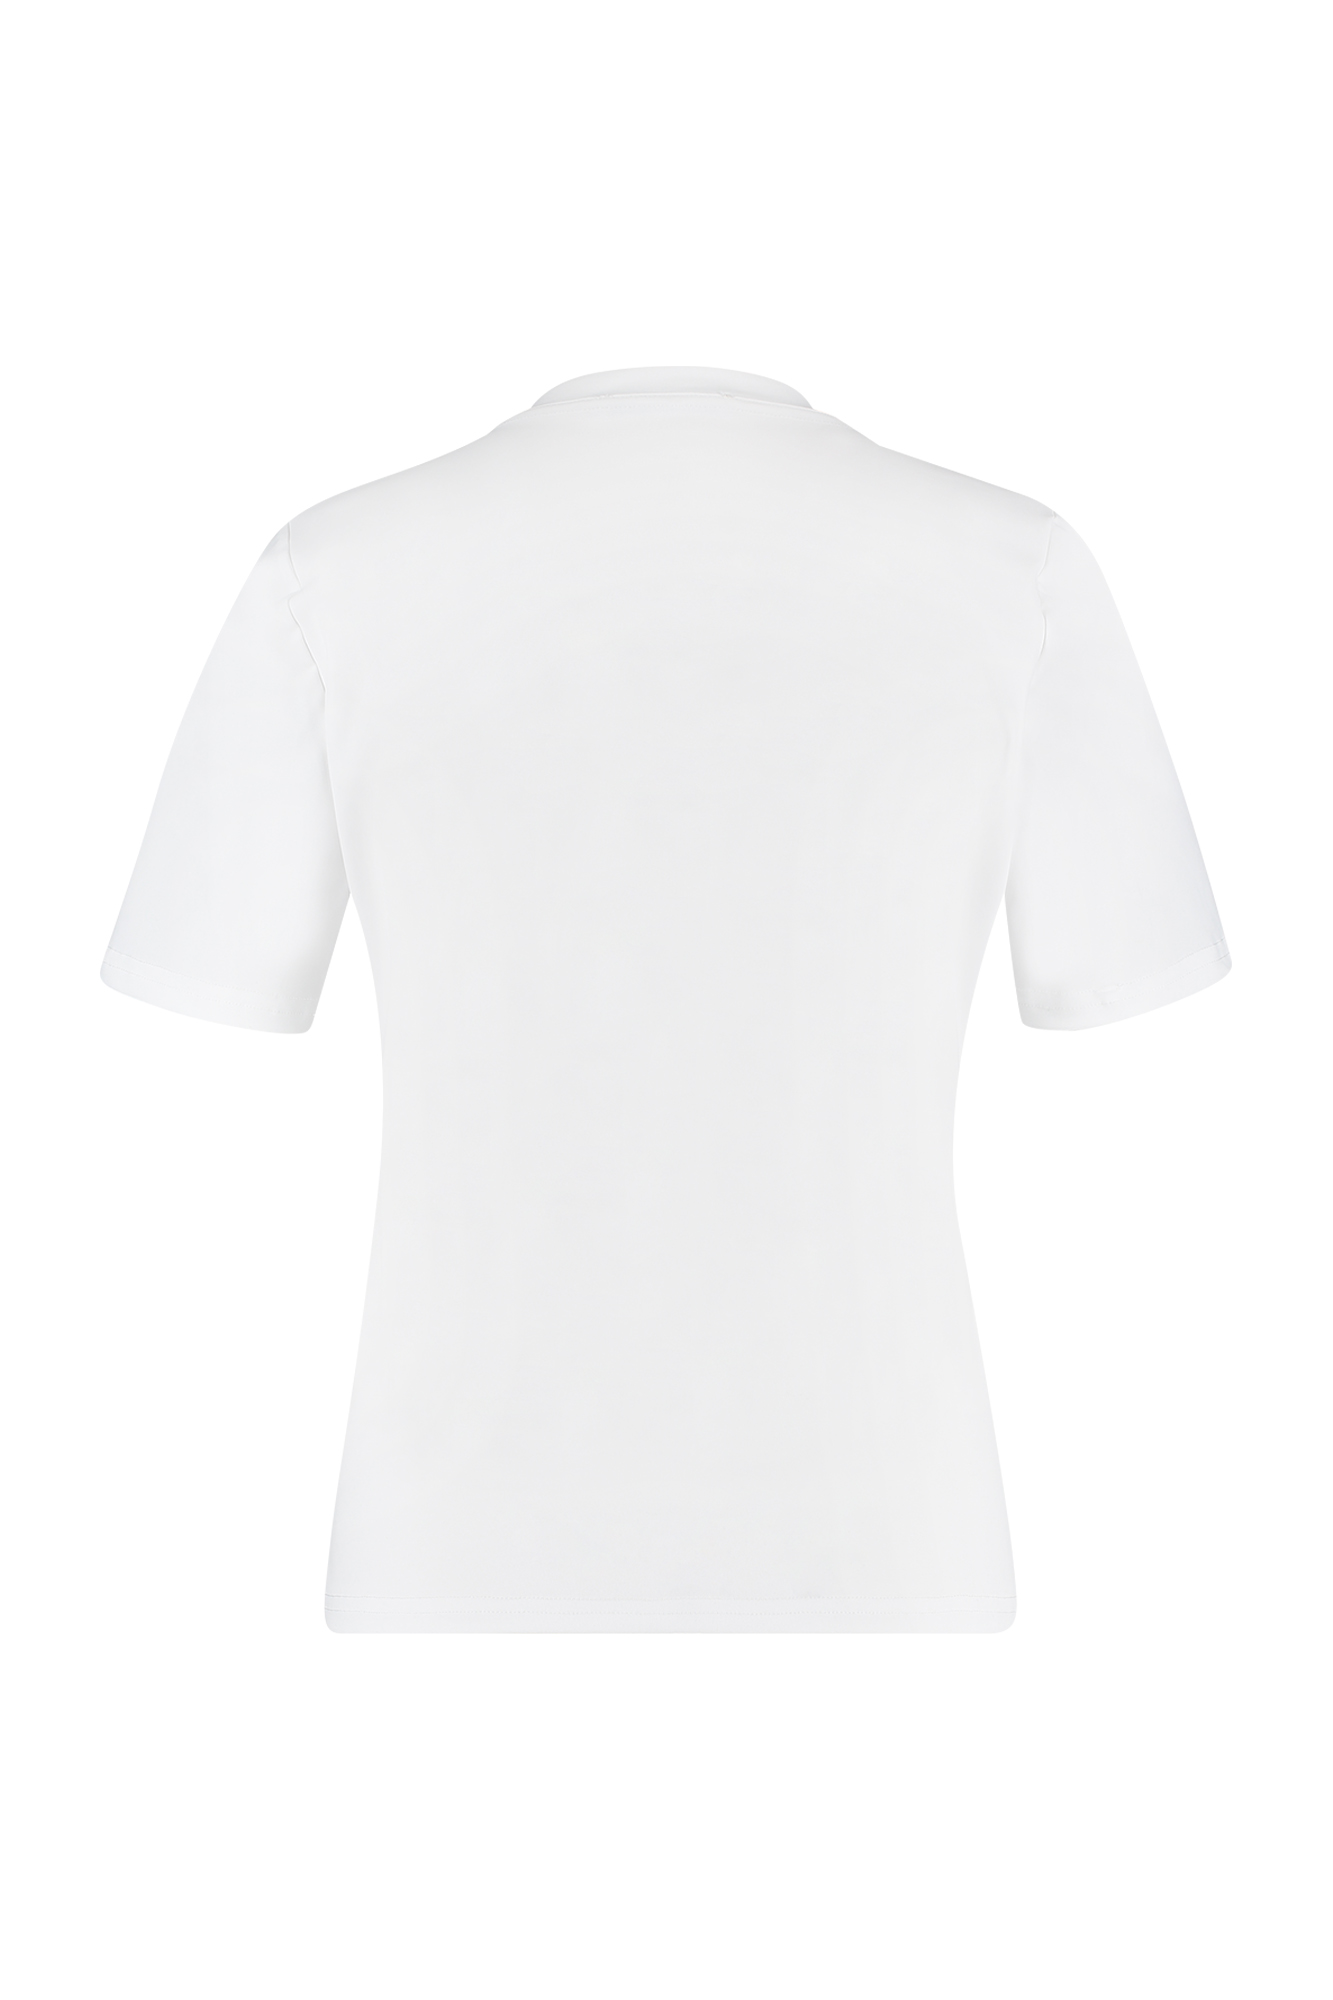 Top Studio Anneloes Travel Tee White T-shirt